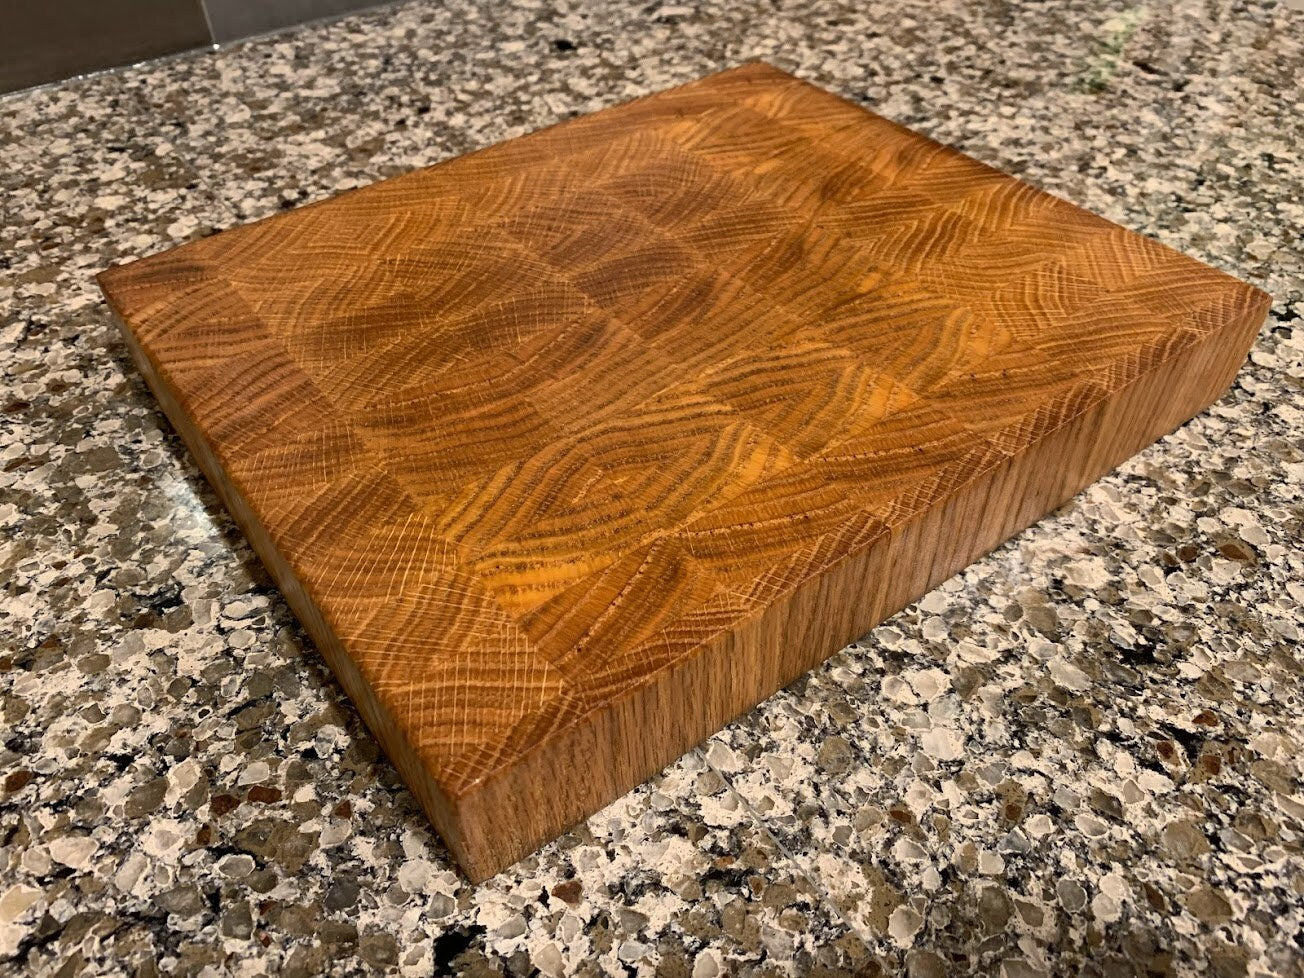 Oak Cutting Board End Grain Butcher Block - Large Wooden Cutting Board for Kitchen, Handmade from oak hard wood